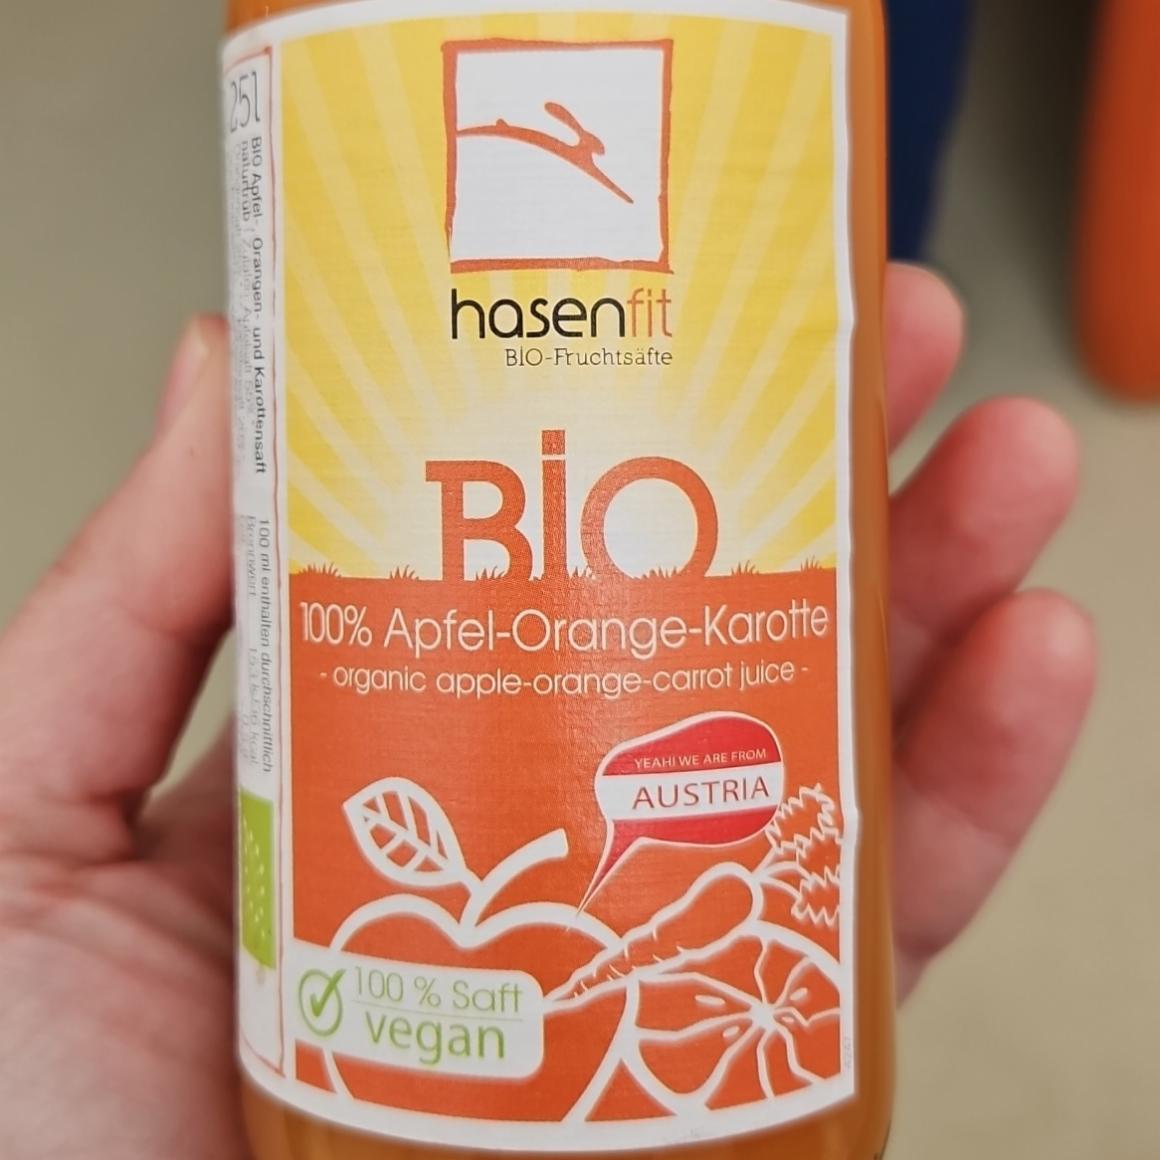 Fotografie - Bio 100% Apfel-Orange-Karotte Hasen fit